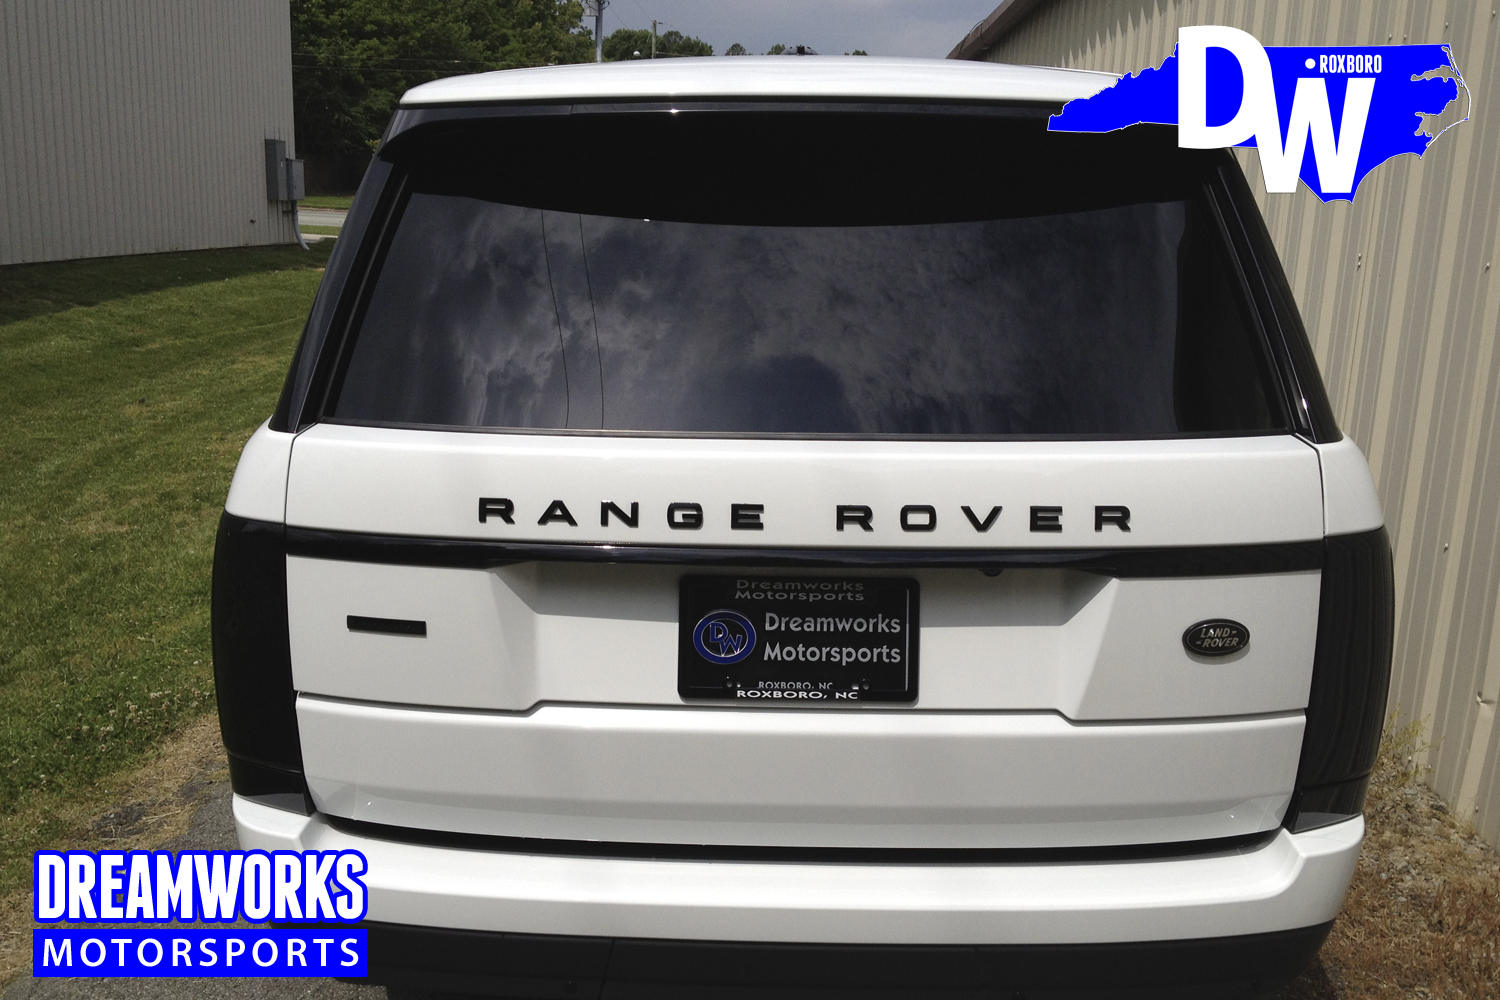 Antawn-Jamison-Range-Rover-By-Dreamworks-Motorsports-6.jpg